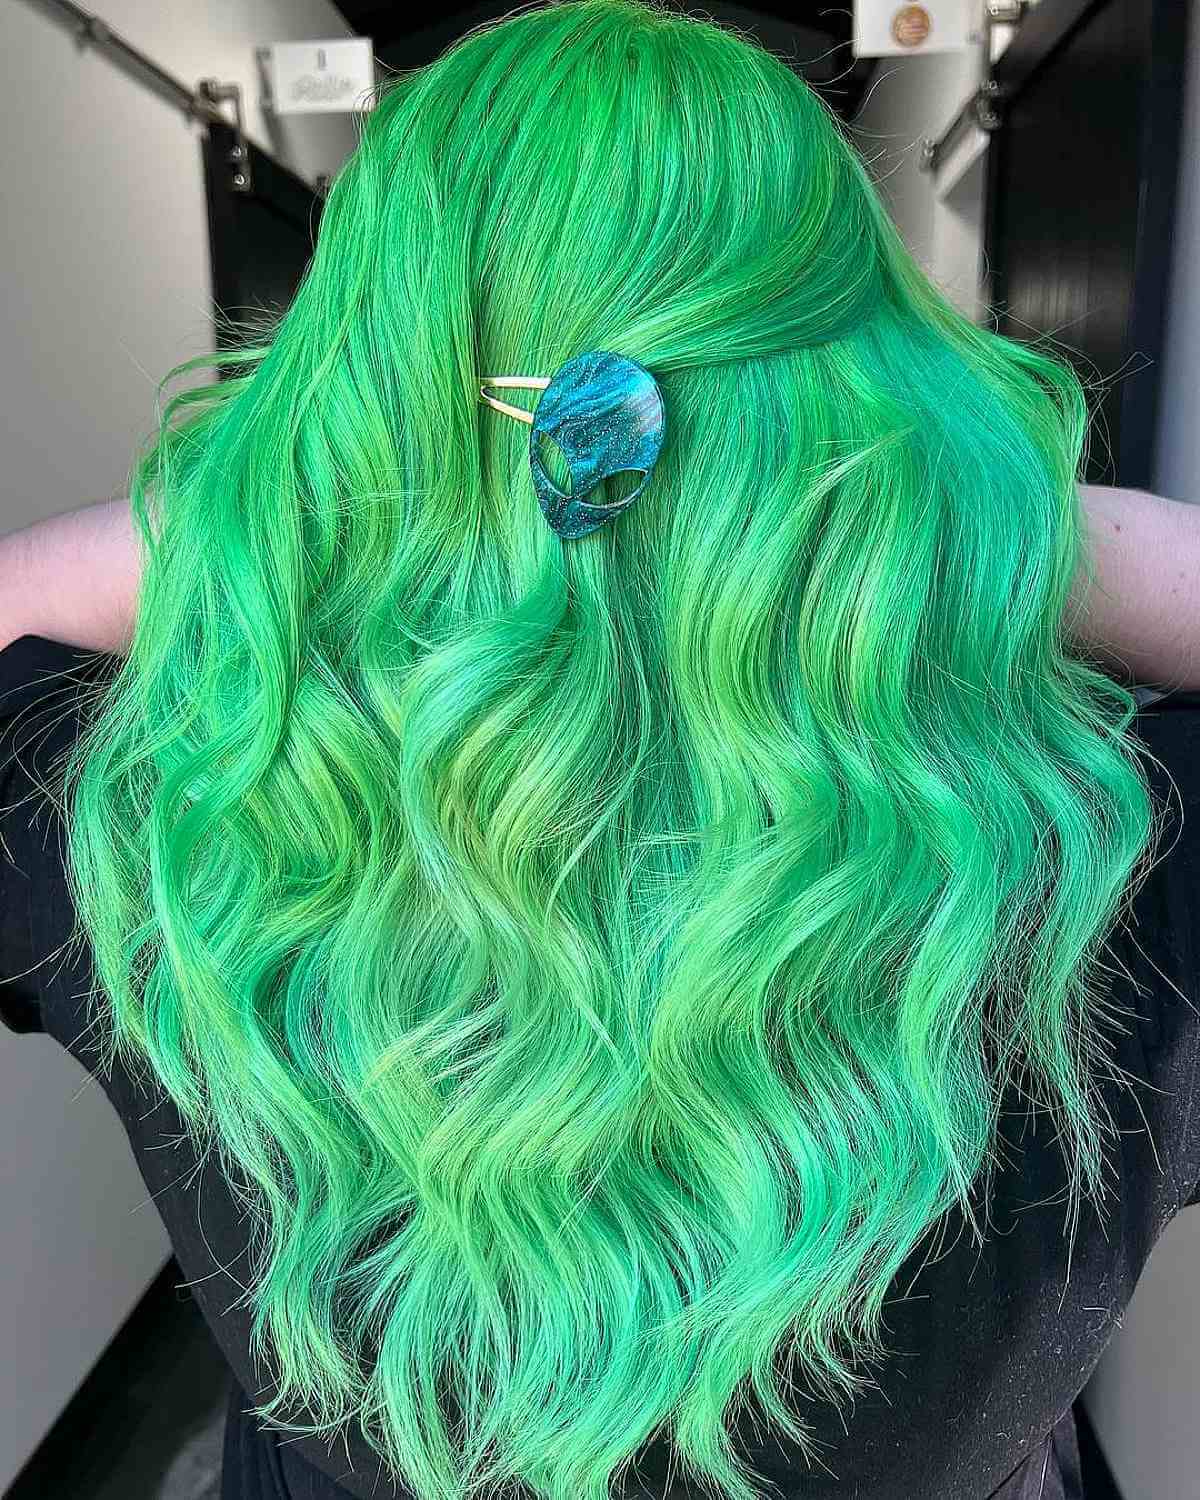 Stunning Waves of Green